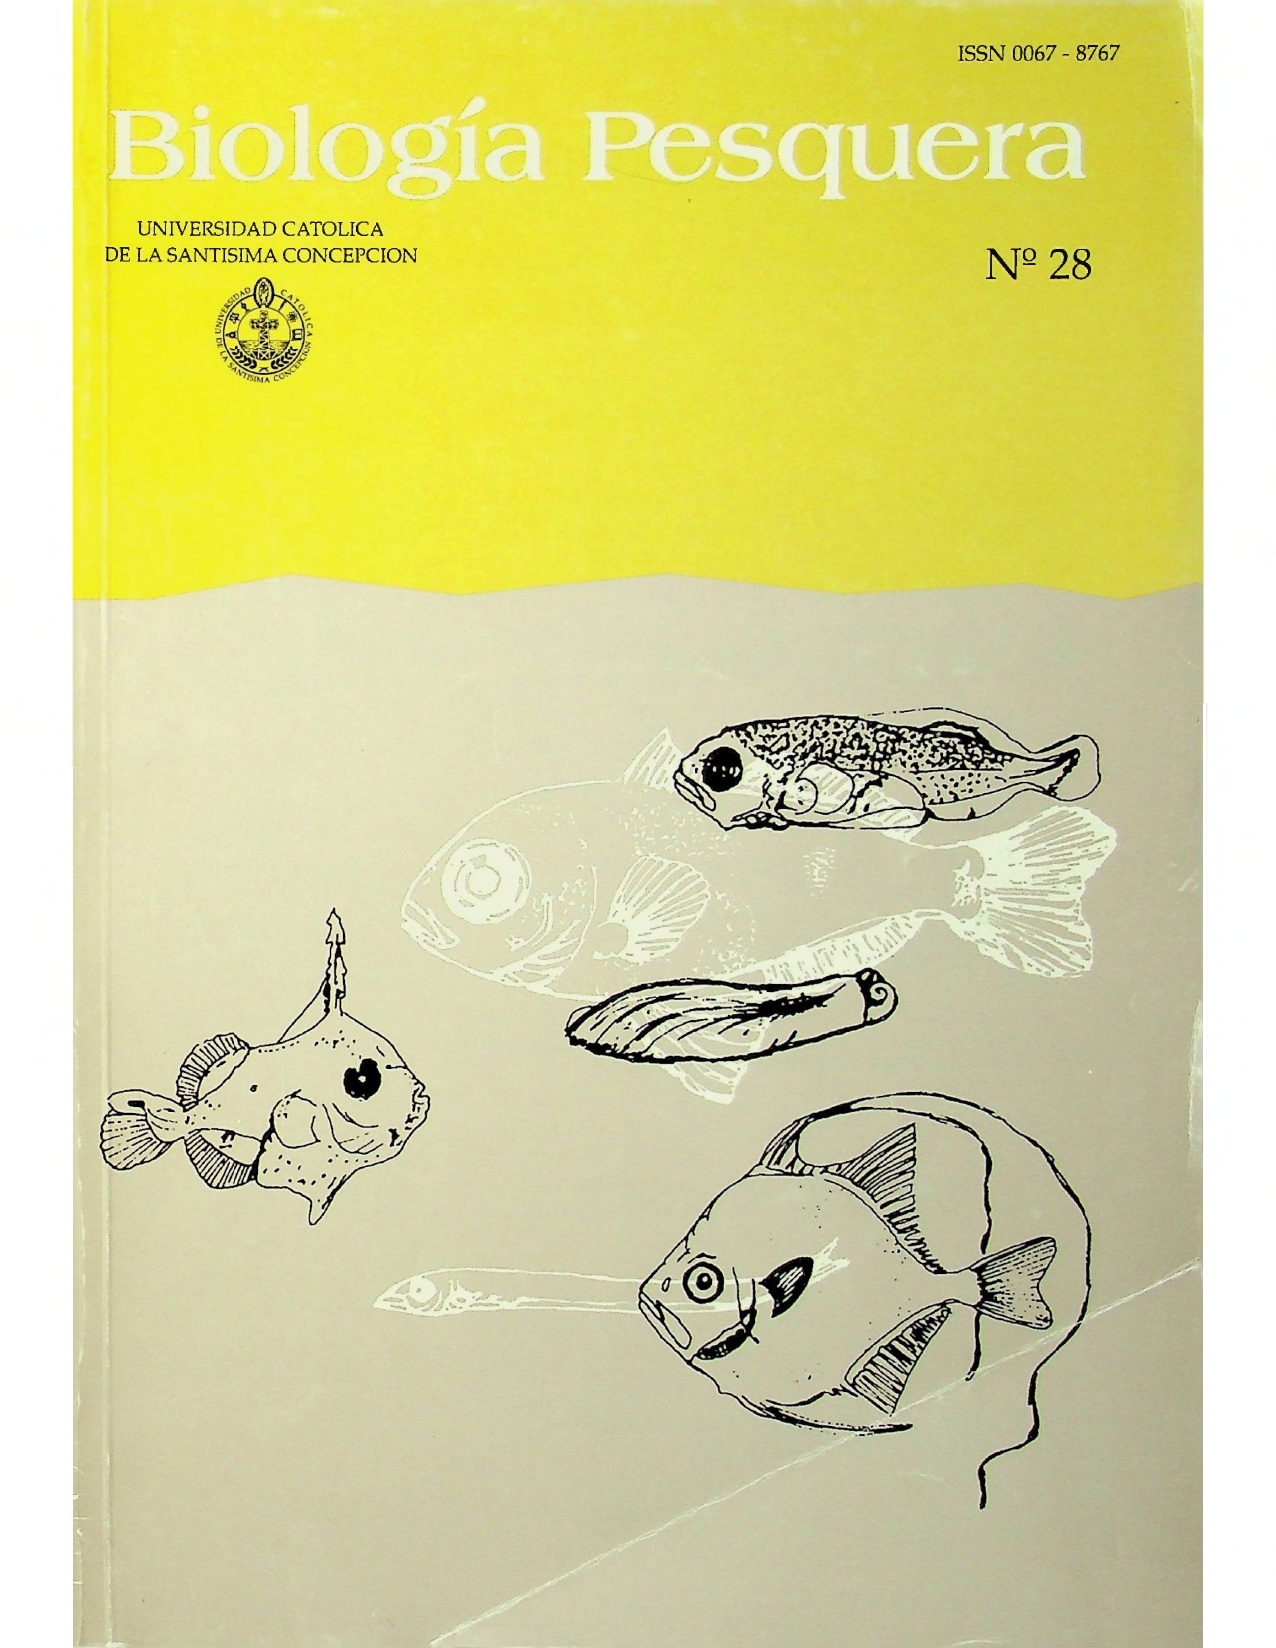 					Ver Núm. 28 (2000): Biología Pesquera
				